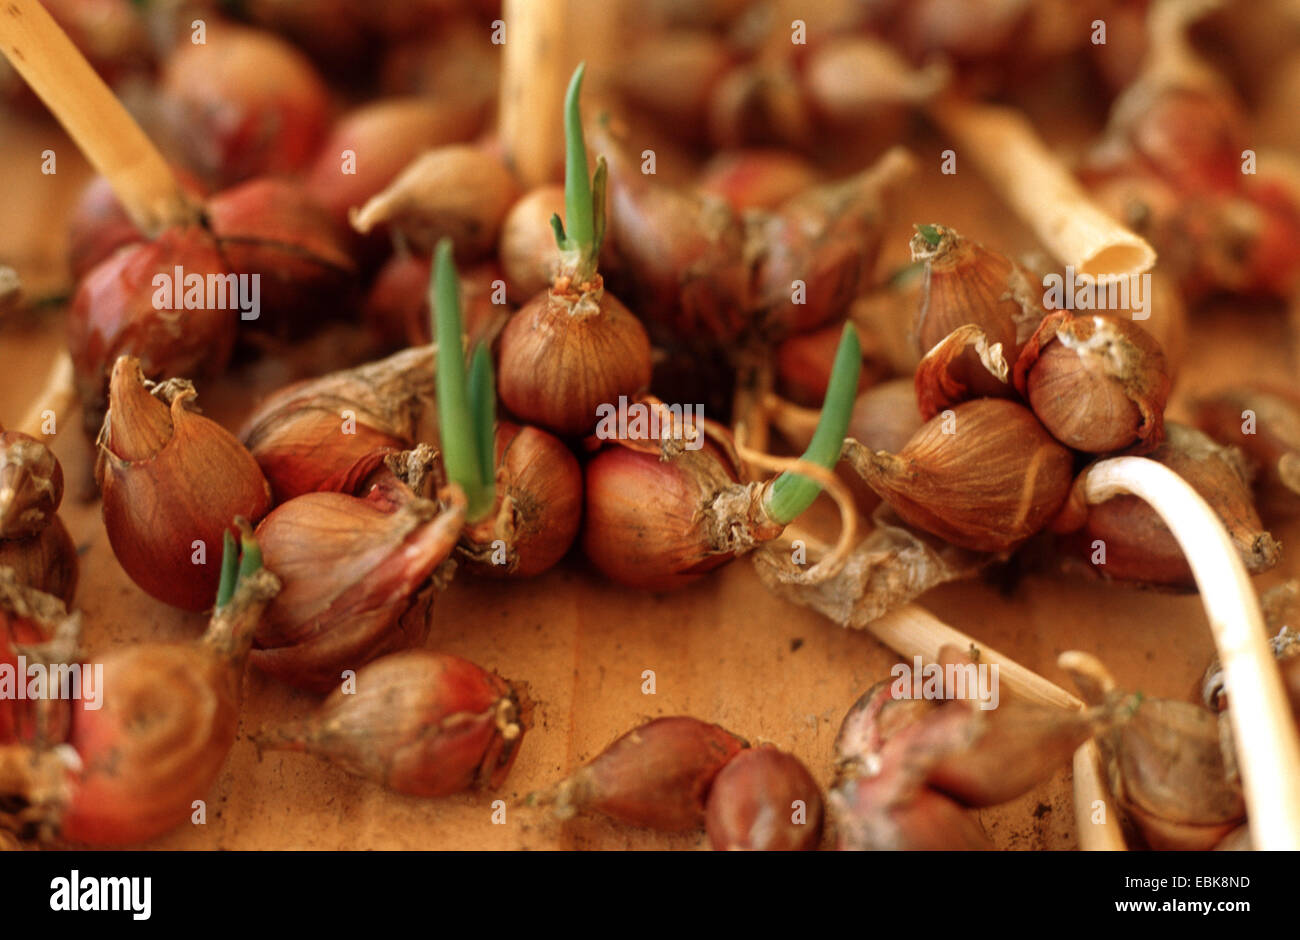 potato onion (Allium cepa var. proliferum, Allium cepa Proliferum), sprouting bulbs Stock Photo